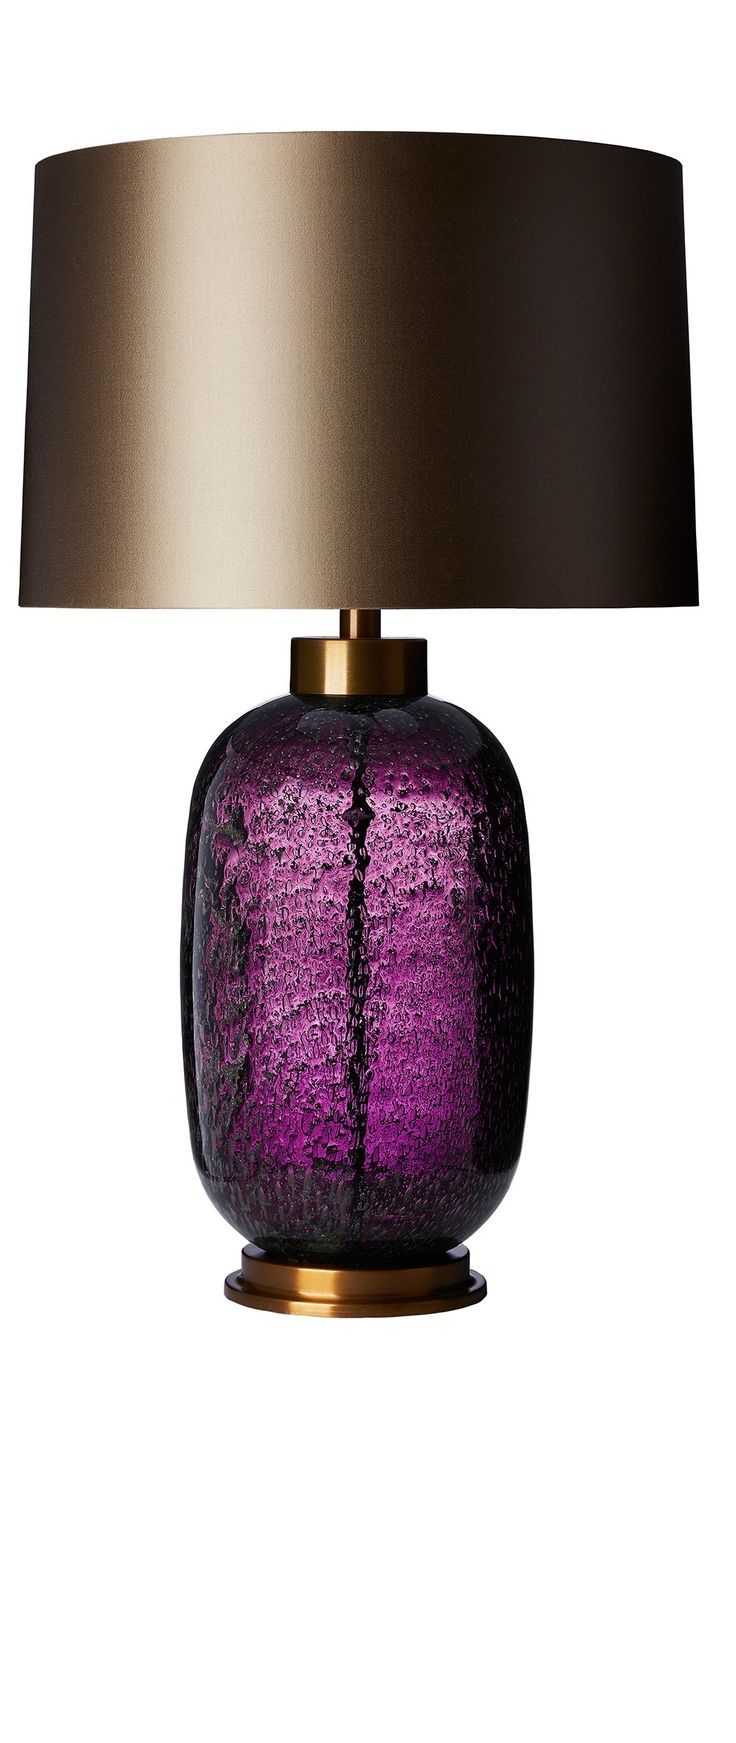 purple bedroom lamp photo - 8